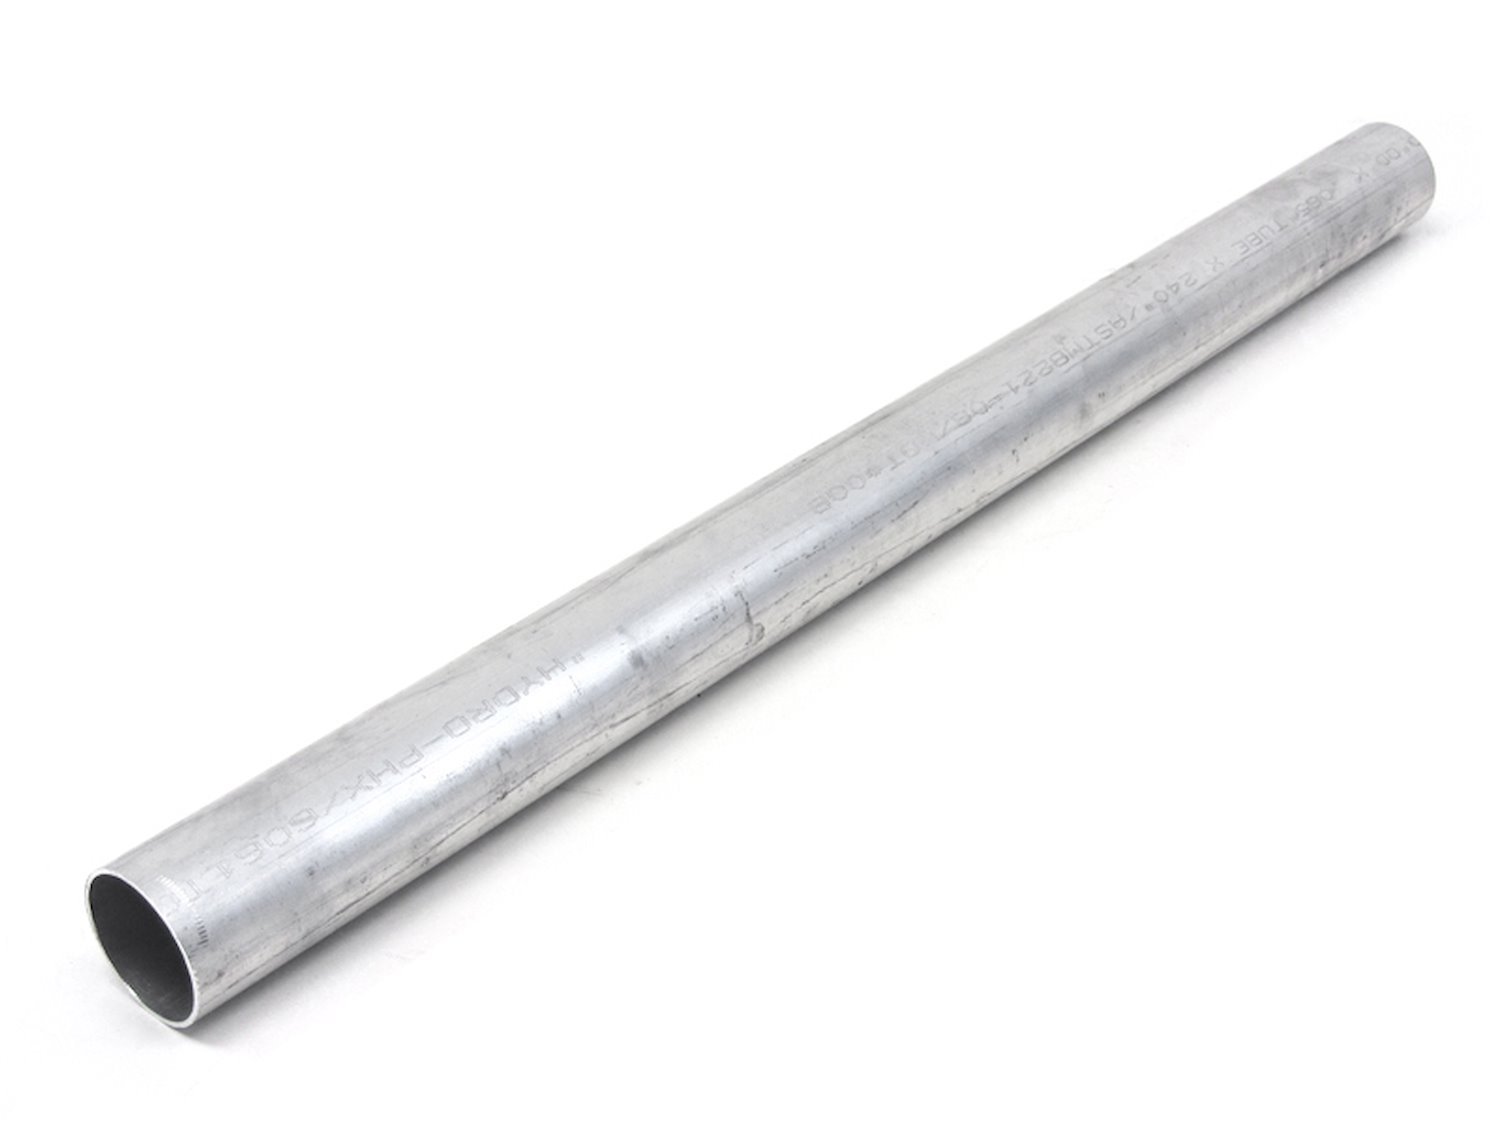 AST-3F-150 Aluminum Tubing, 6061 Aluminum, Straight Tubing, 1-1/2 in. OD, Seamless, Raw Finish, 3 ft. Long